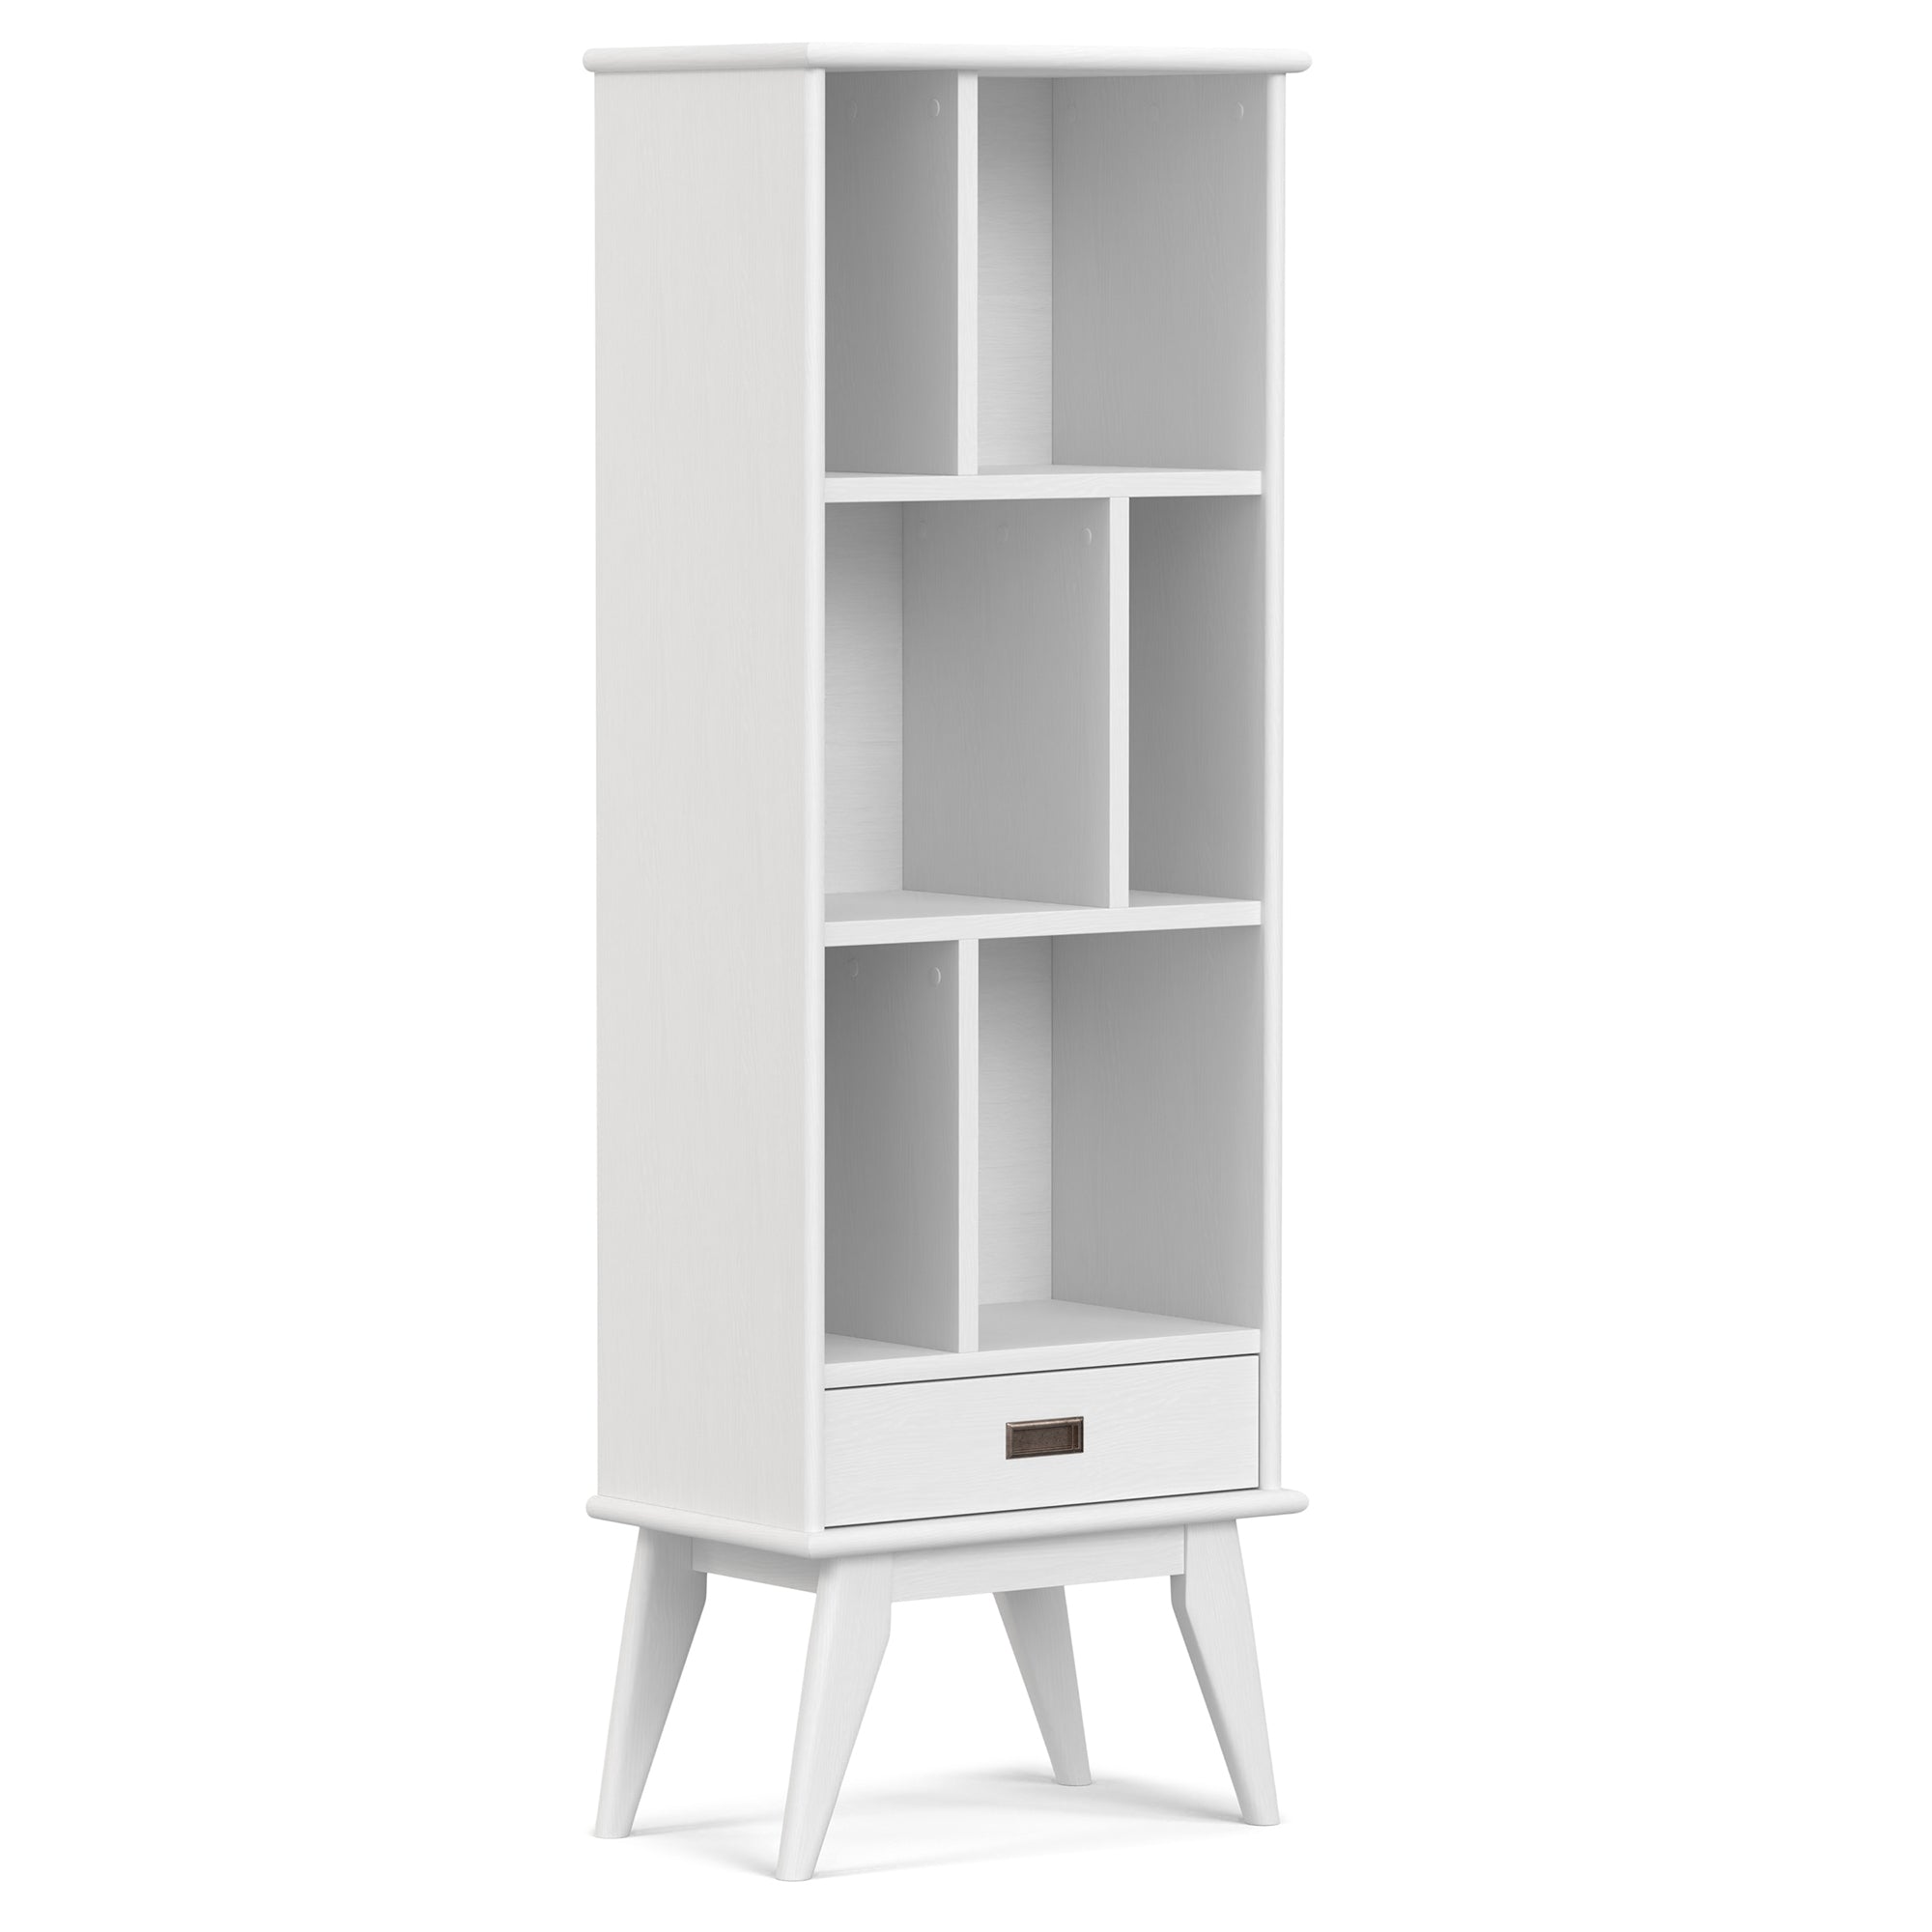 White | Draper Mid Century 64 x 22 inch Bookcase with Storage in Medium Auburn Brown